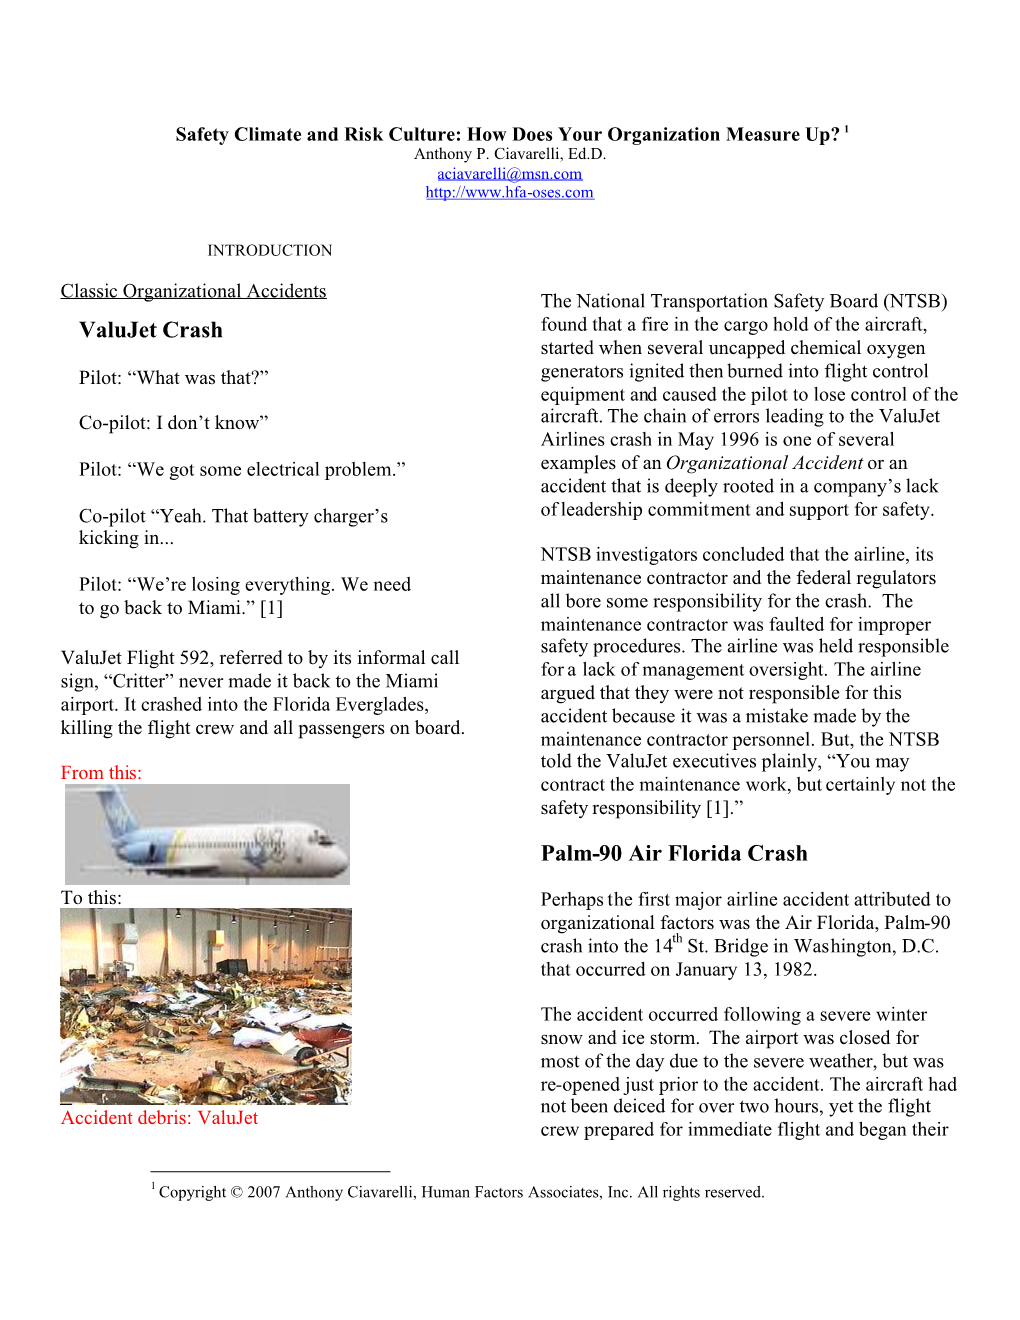 Palm-90 Air Florida Crash Valujet Crash